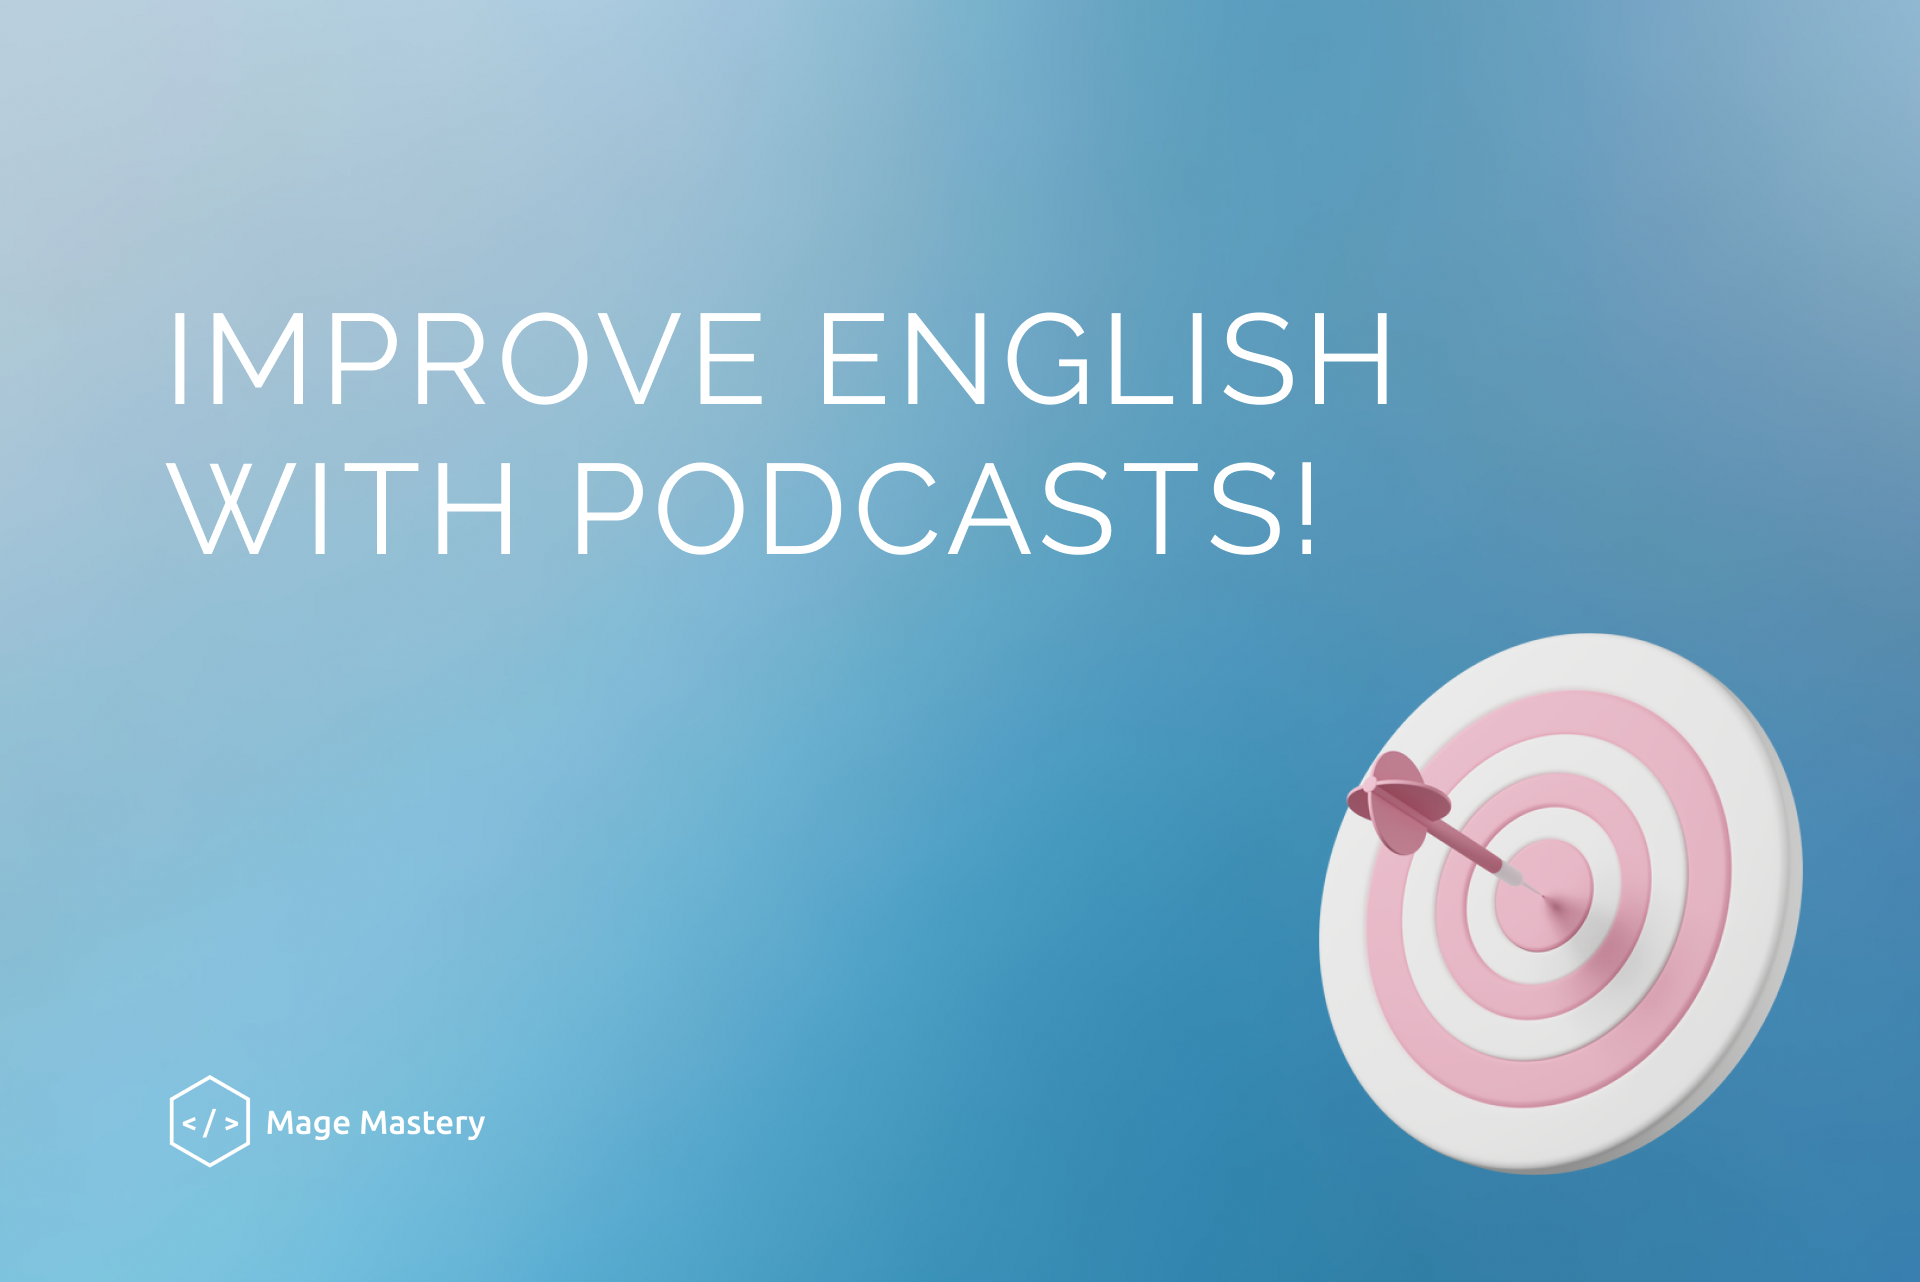 7 podcasts for improving English language